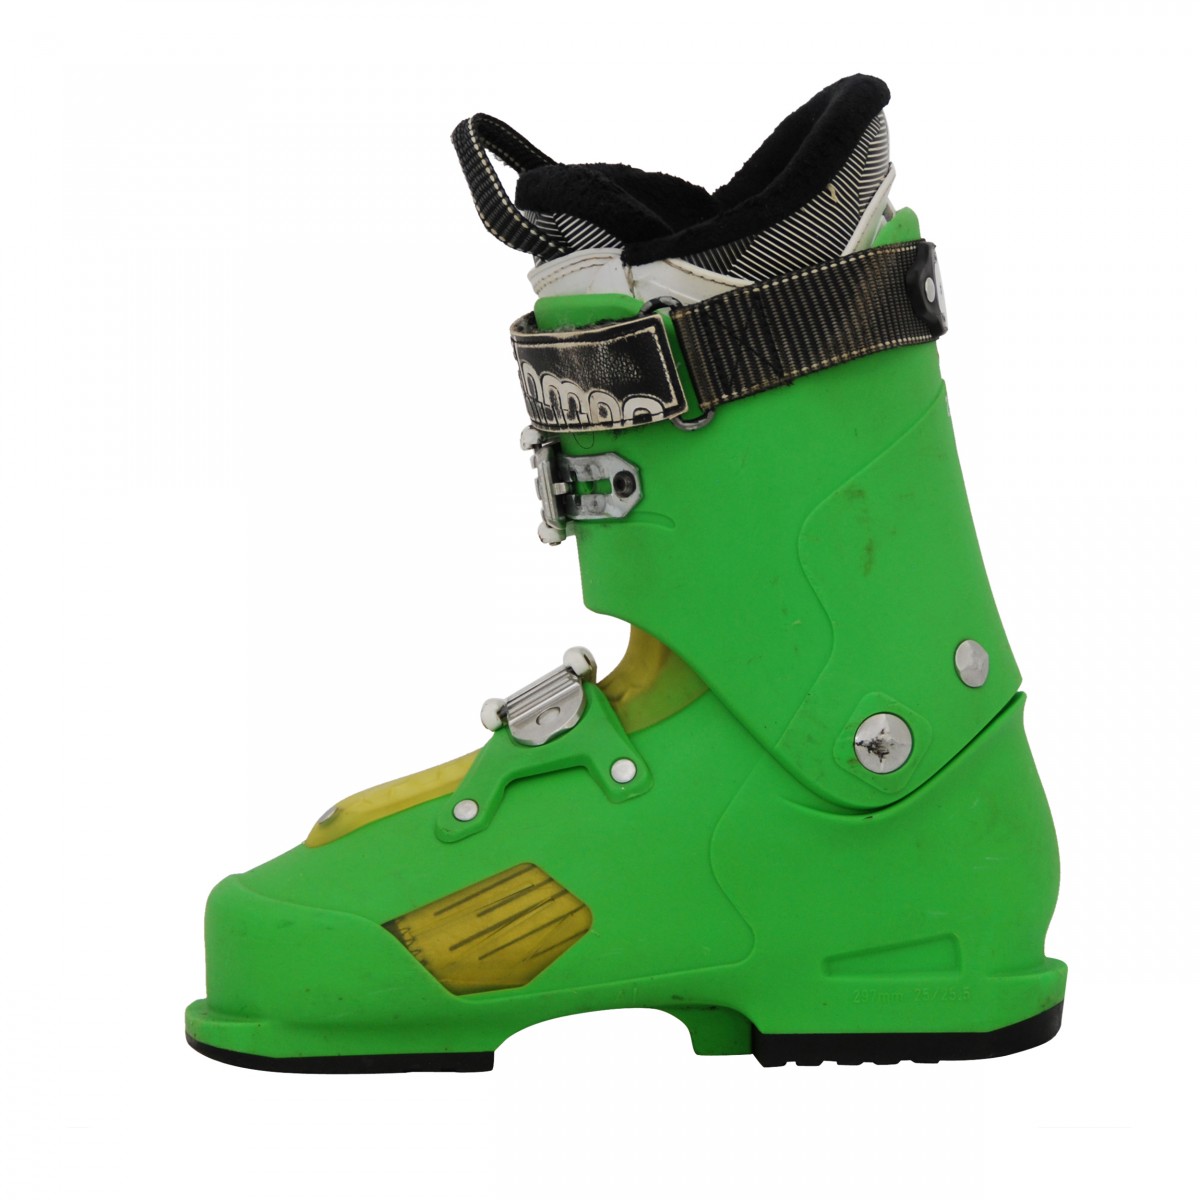 Used ski boot Salomon focus green